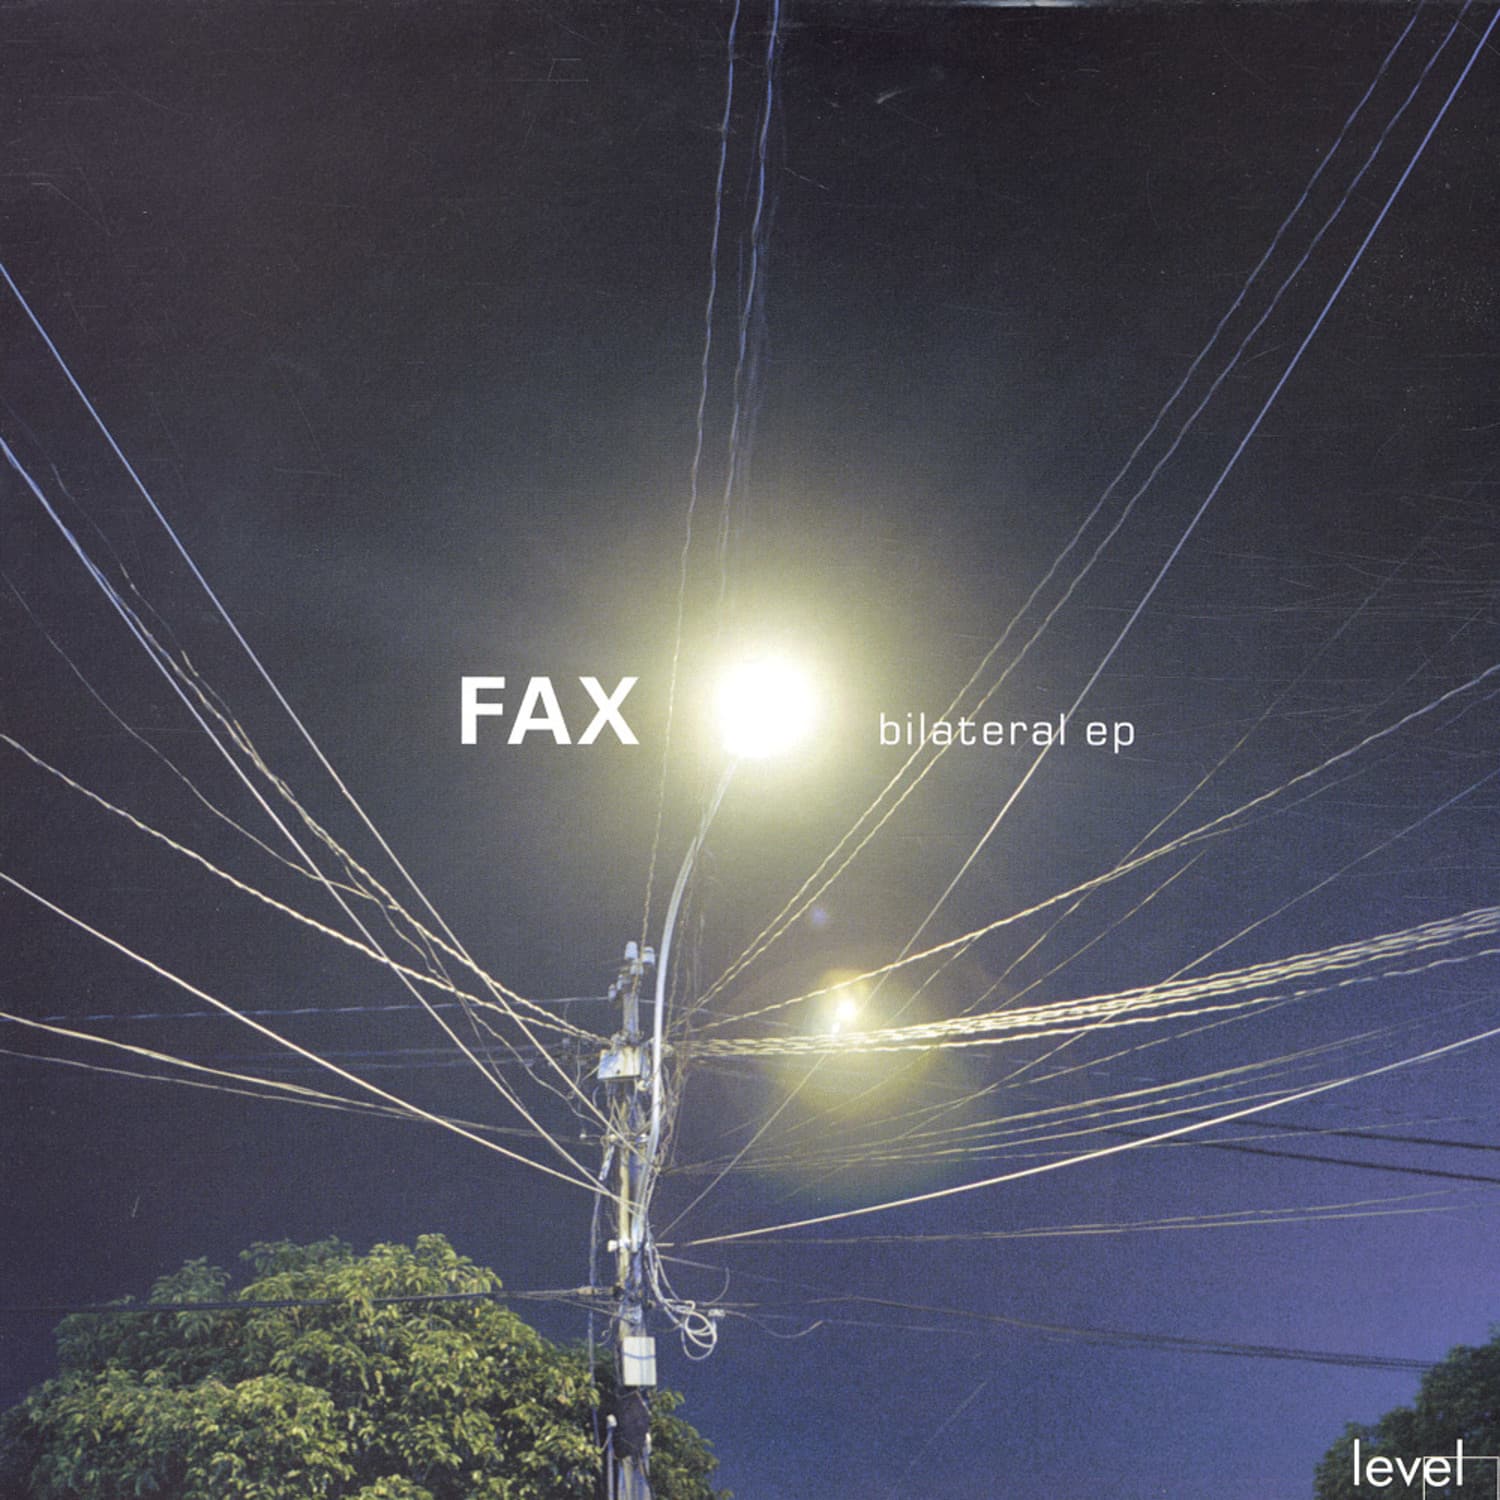 Fax - BILATERAL EP